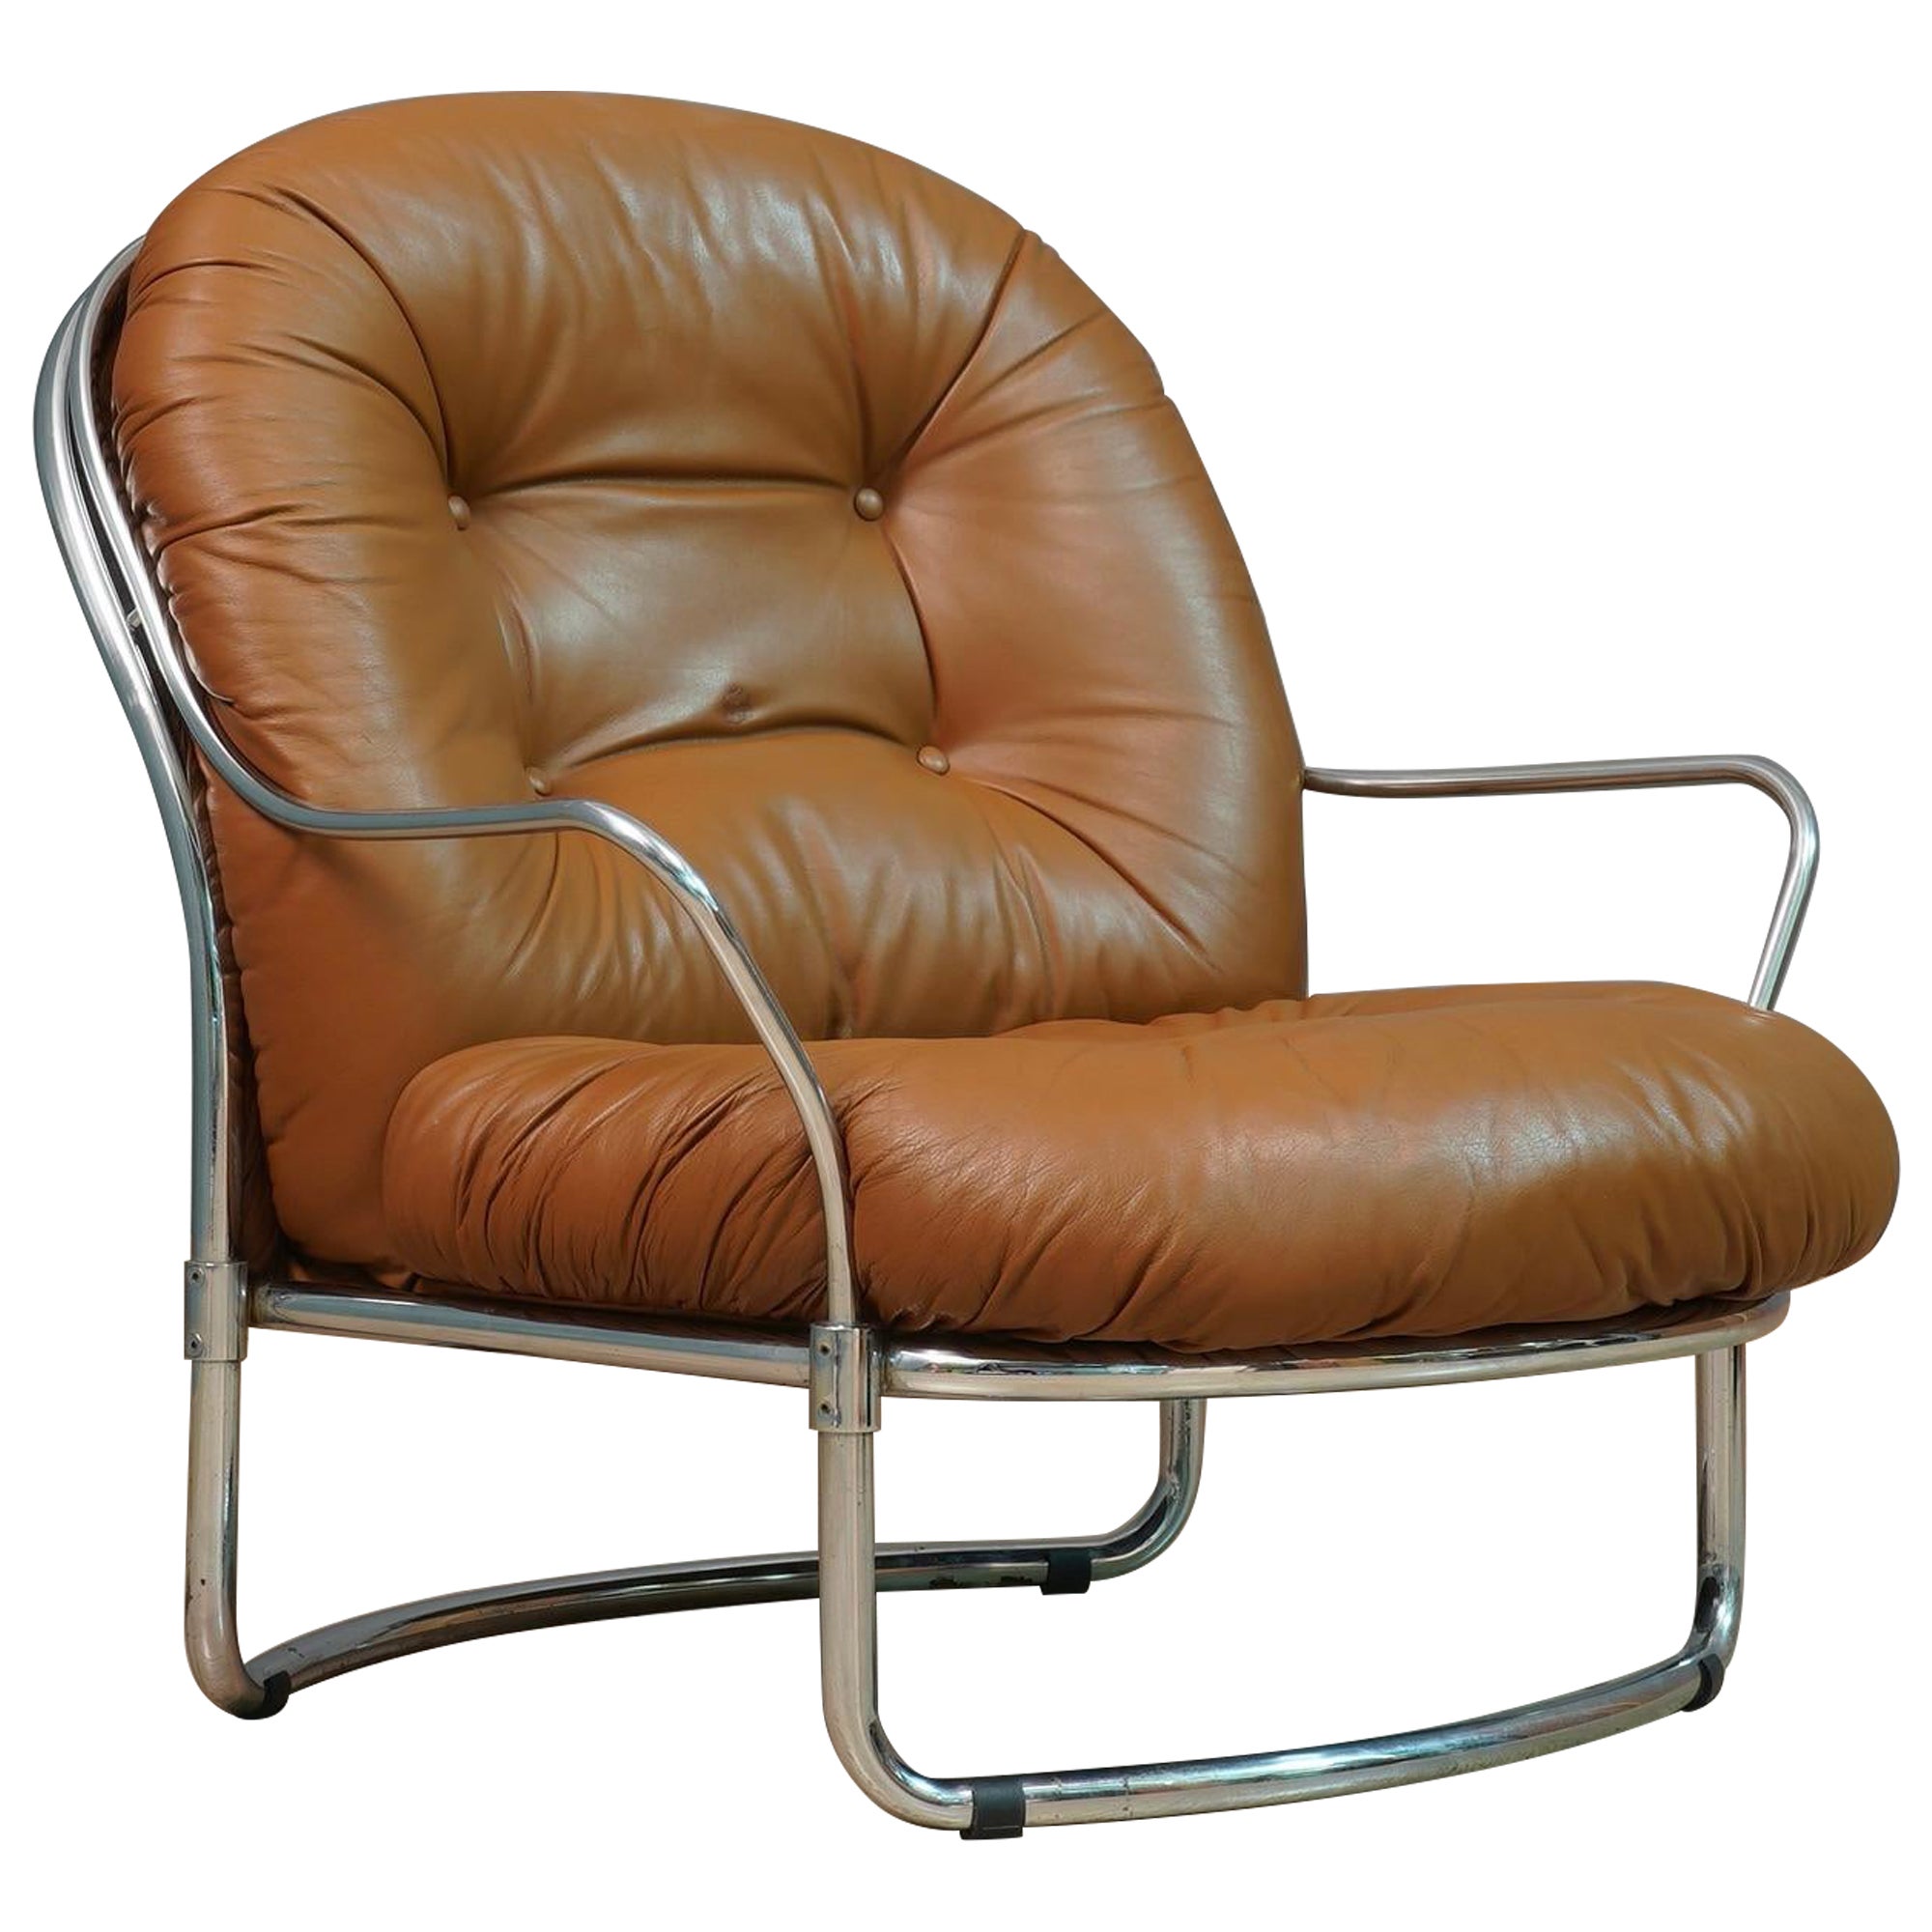 Carlo De Carli for Cinova Mod. 915 Chrome and Brown Leather Arm Chair, 1969 For Sale